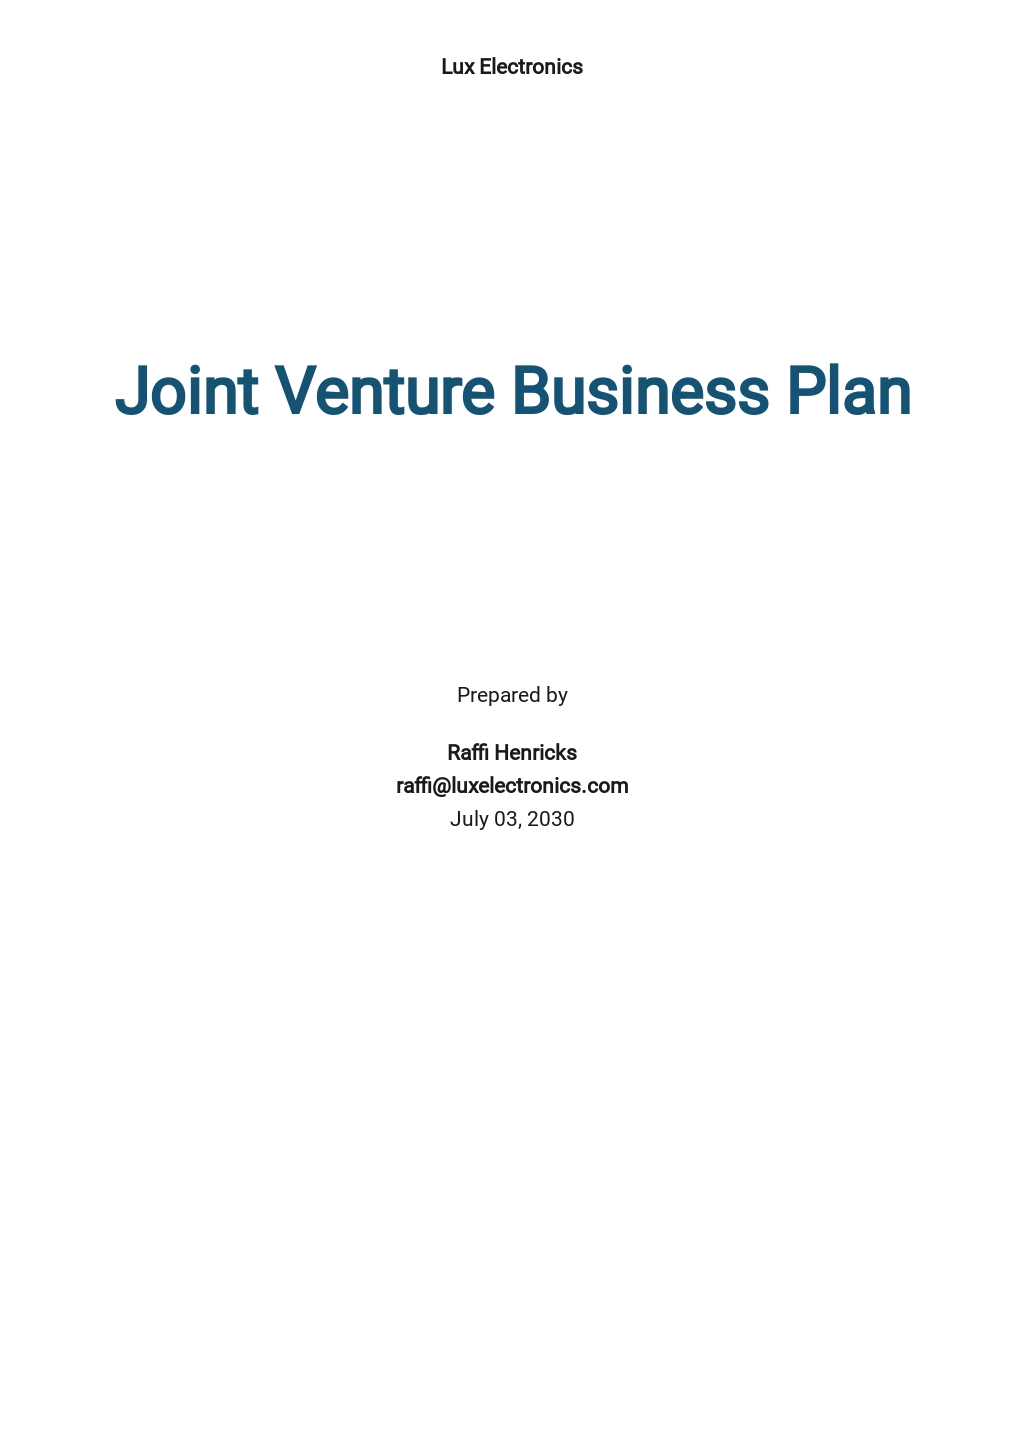 Joint Venture Business Plan Template.jpe